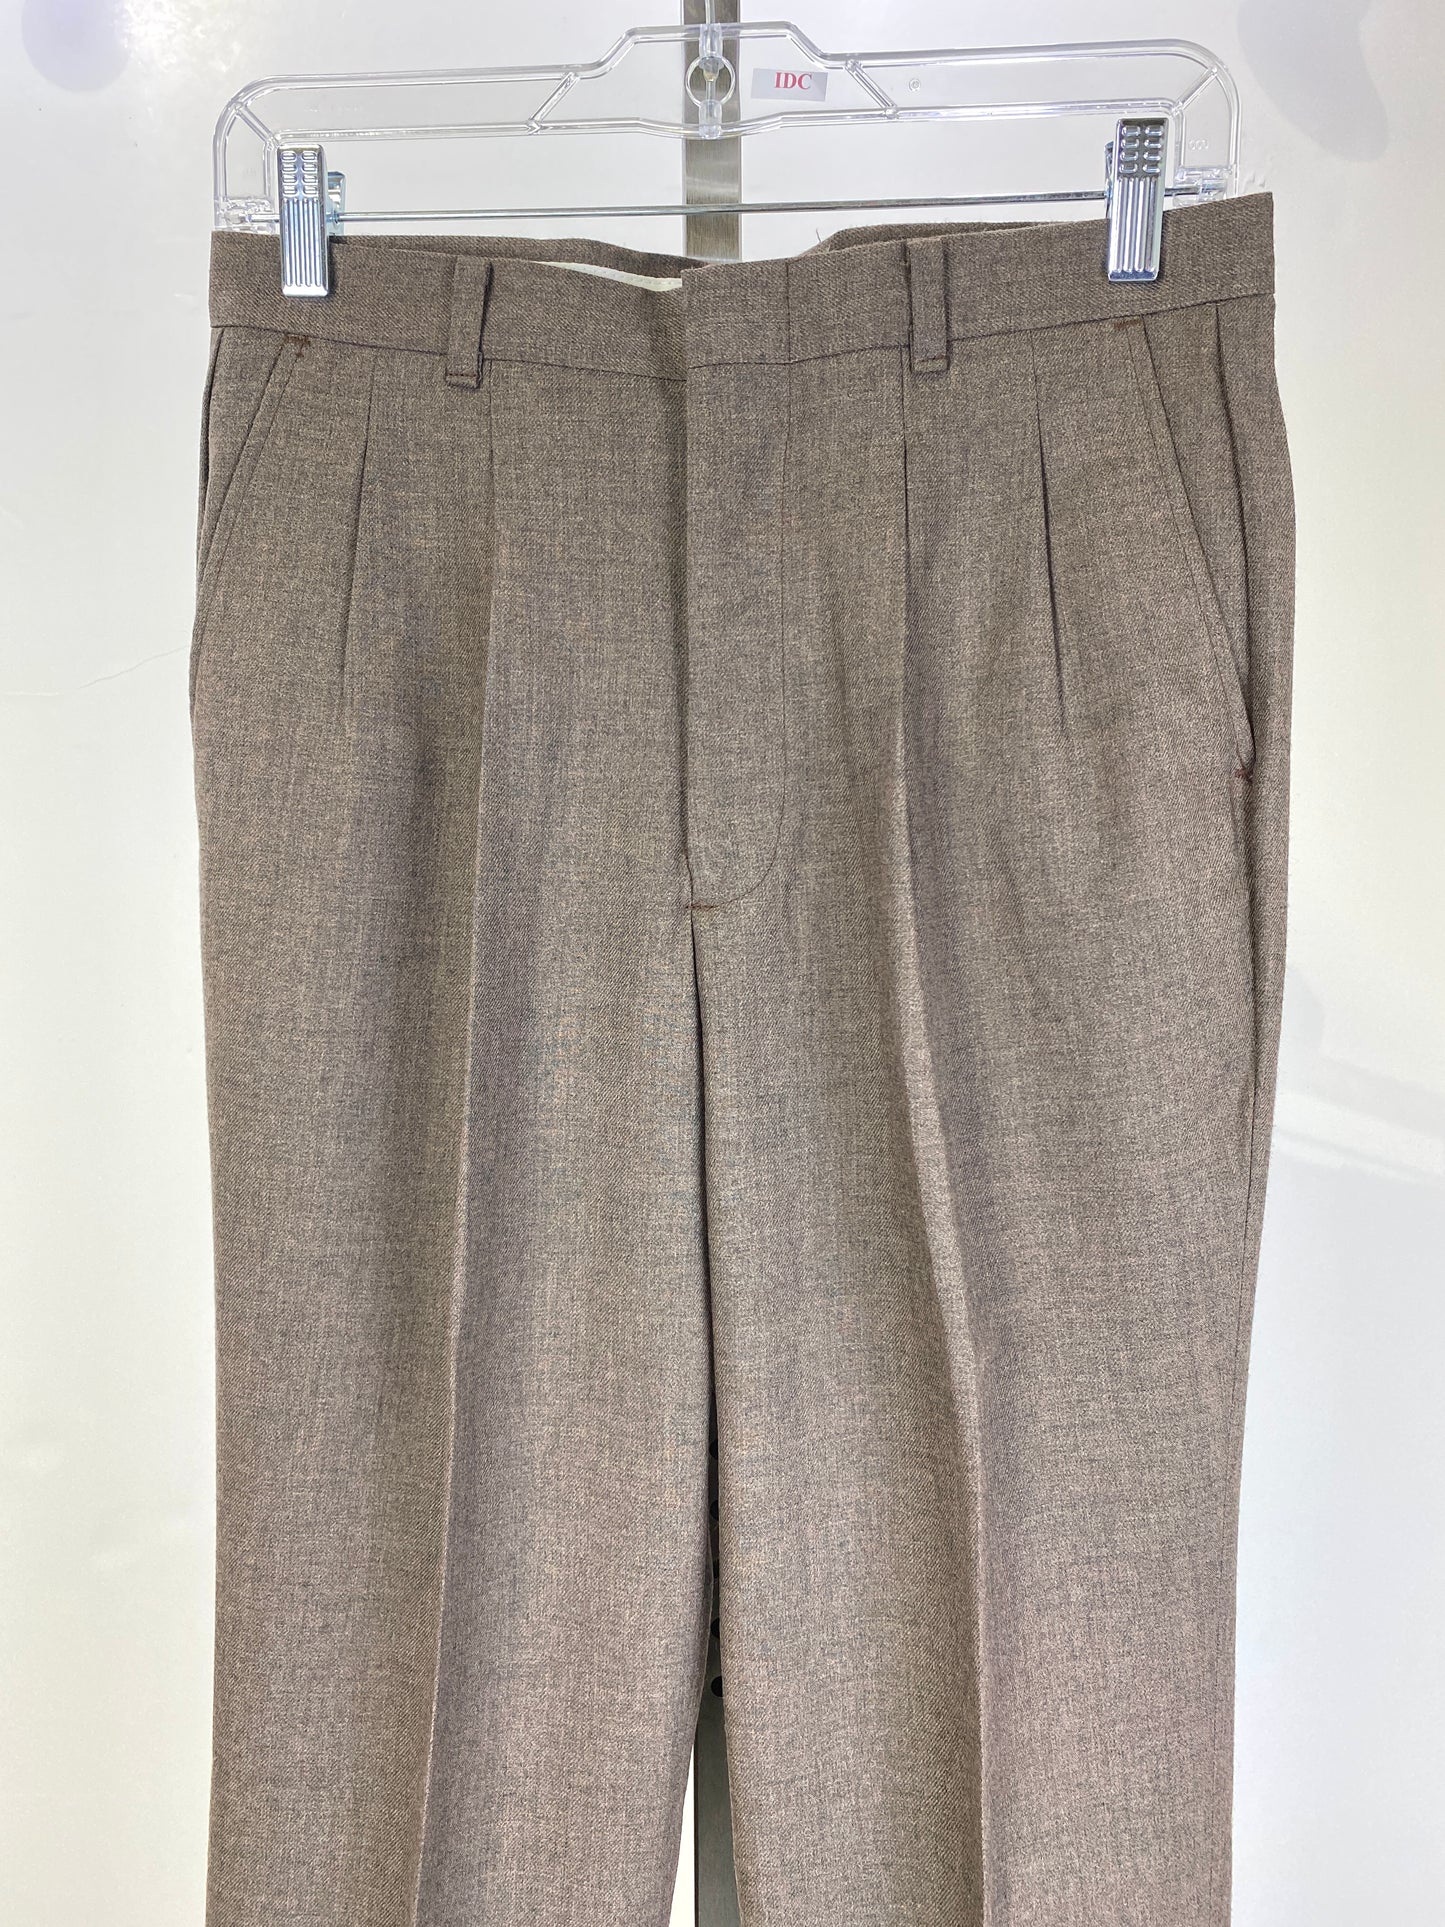 Vintage 1970s Deadstock Slacks, Men's Brown Polywool Trousers, NOS